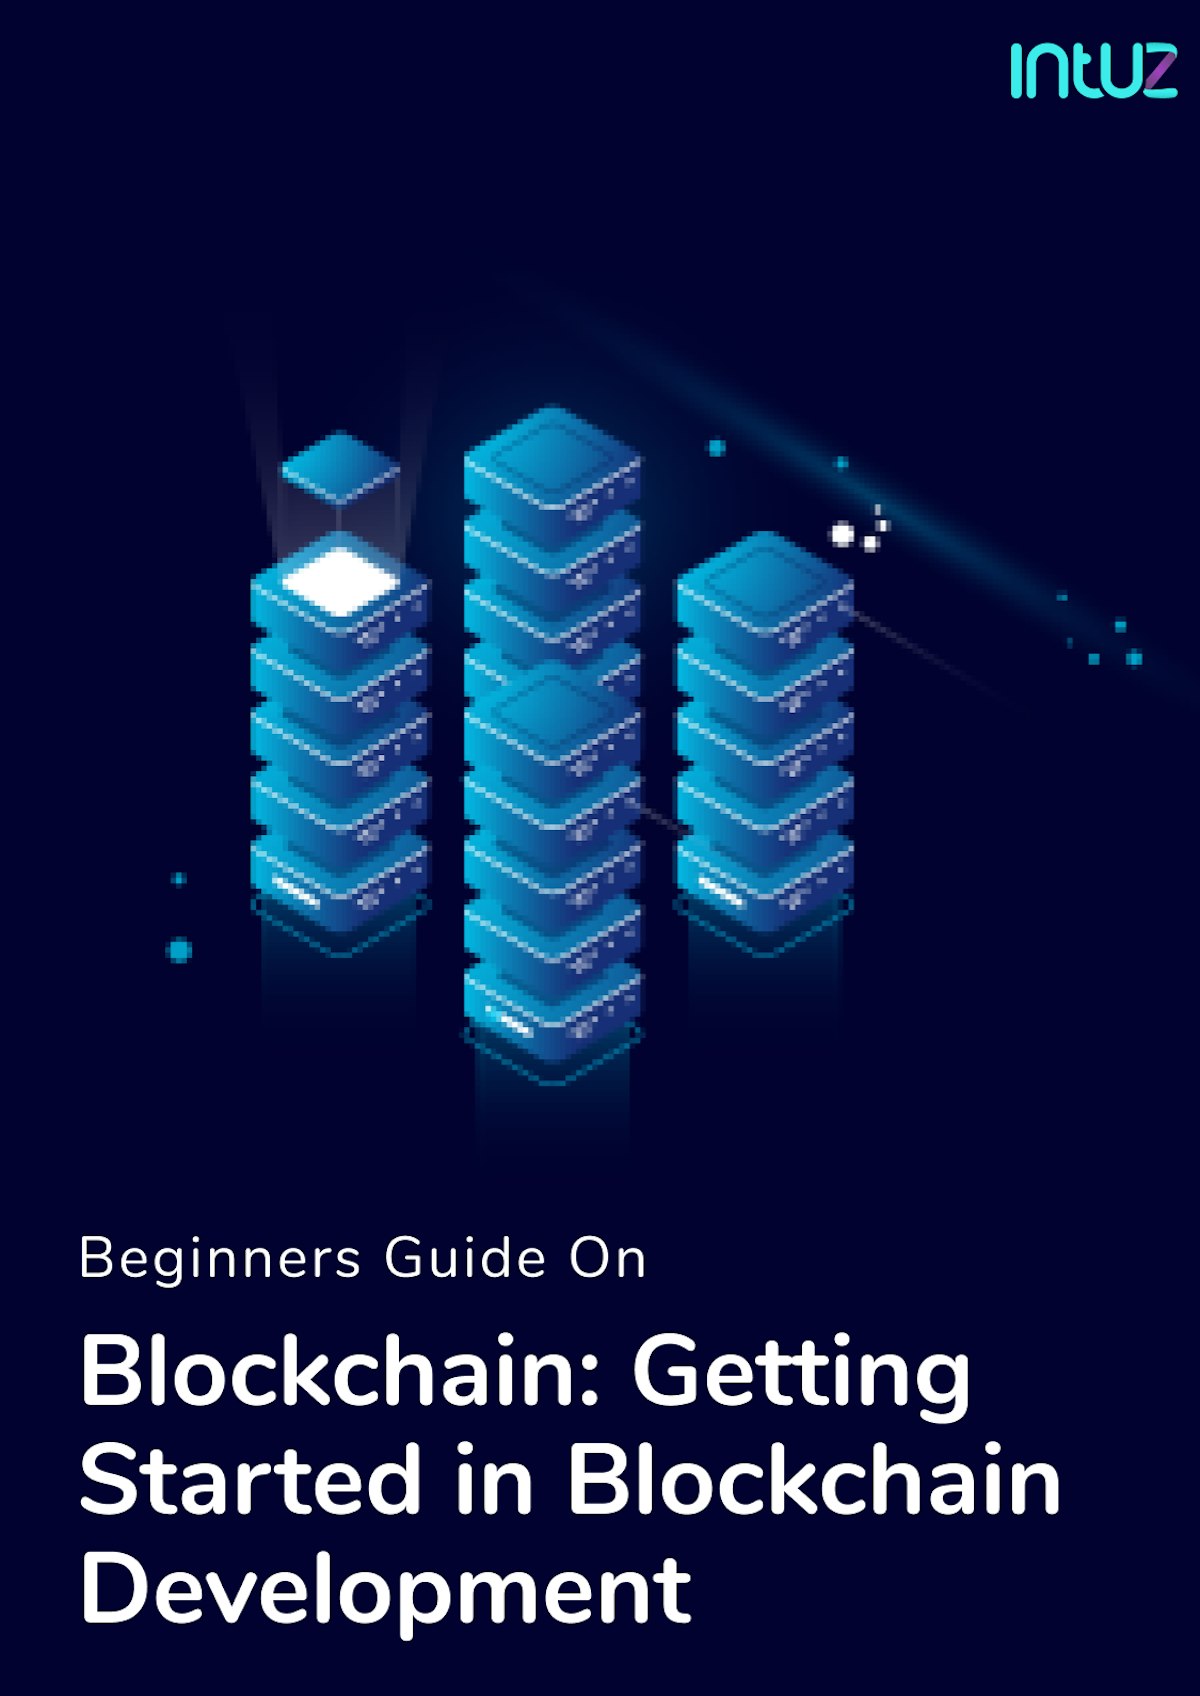 Blockchain Development - Guide